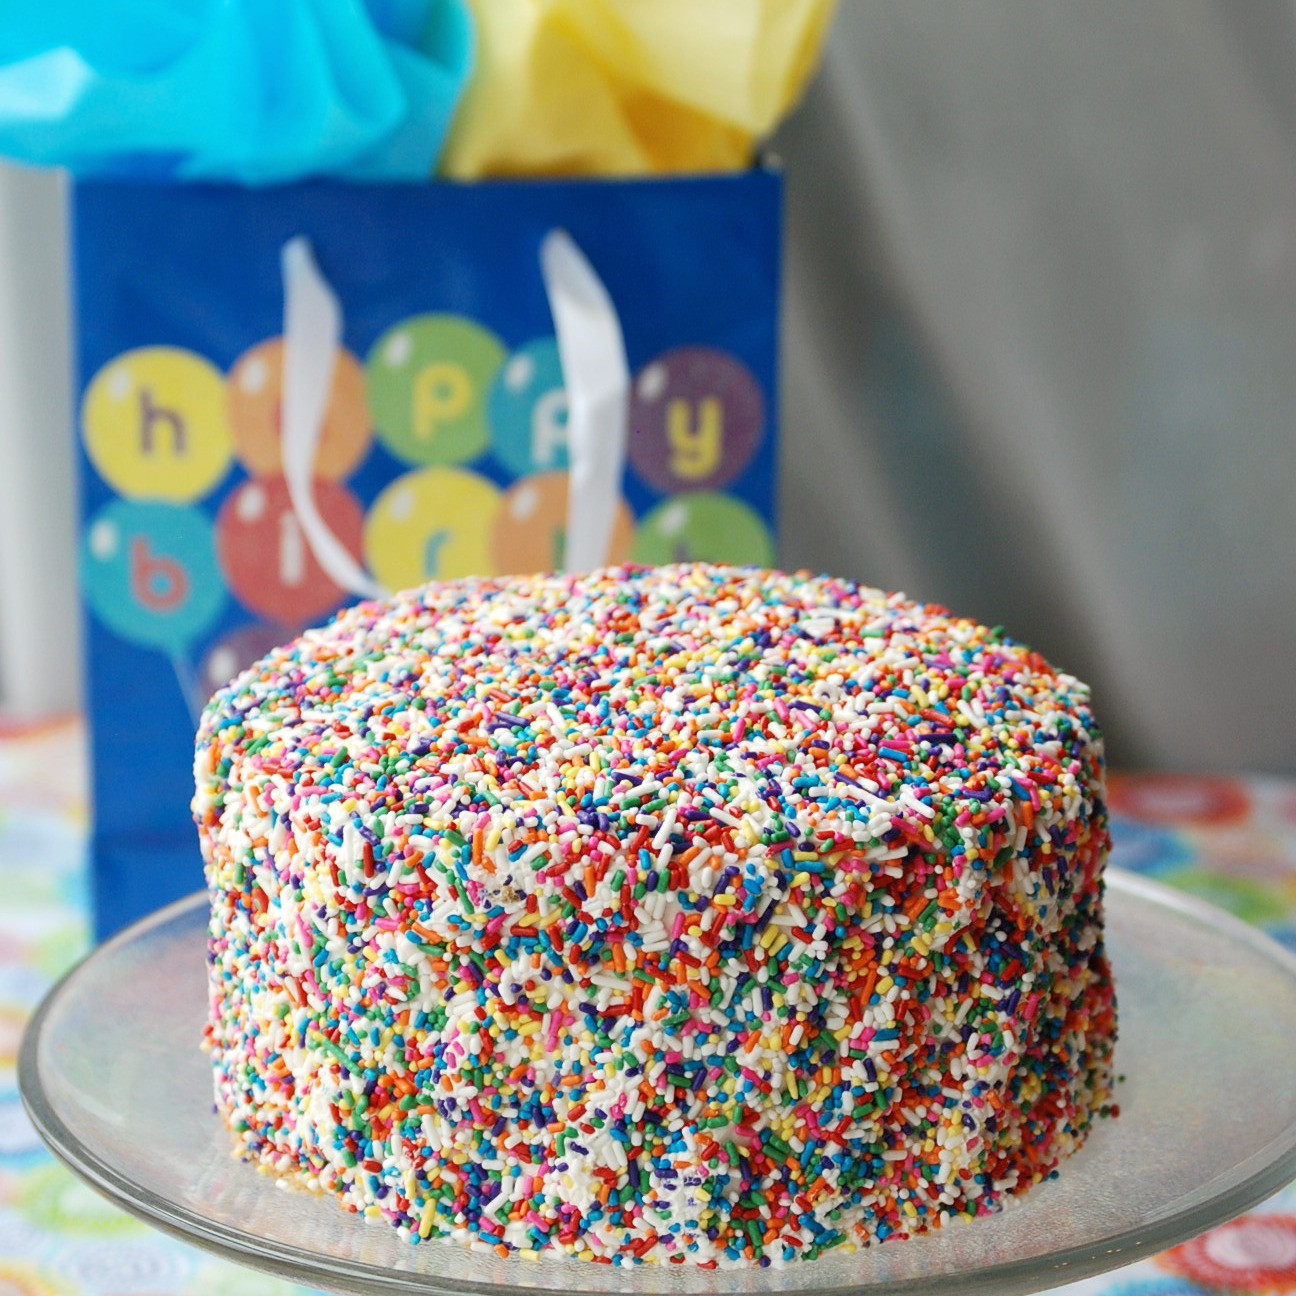 Sprinkle Birthday Cake
 Sprinkle Cake